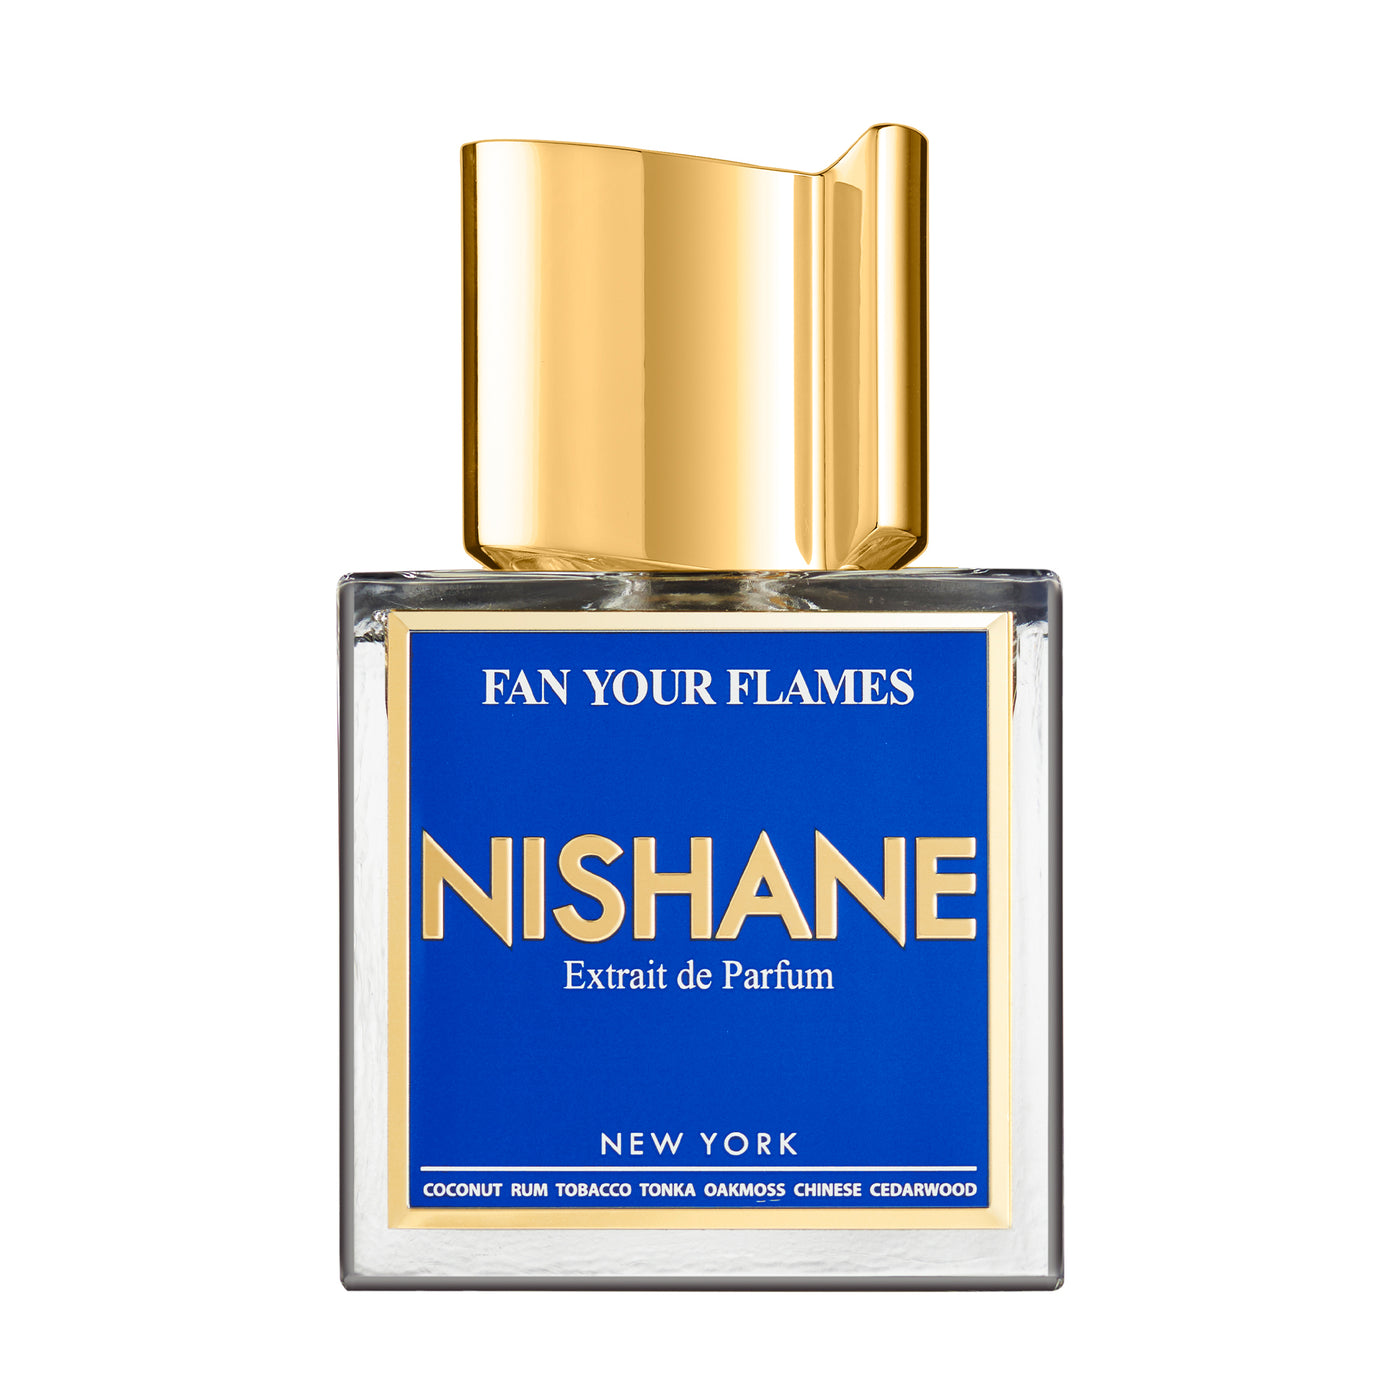 Nishane Fan Your Flames EXT 100ml